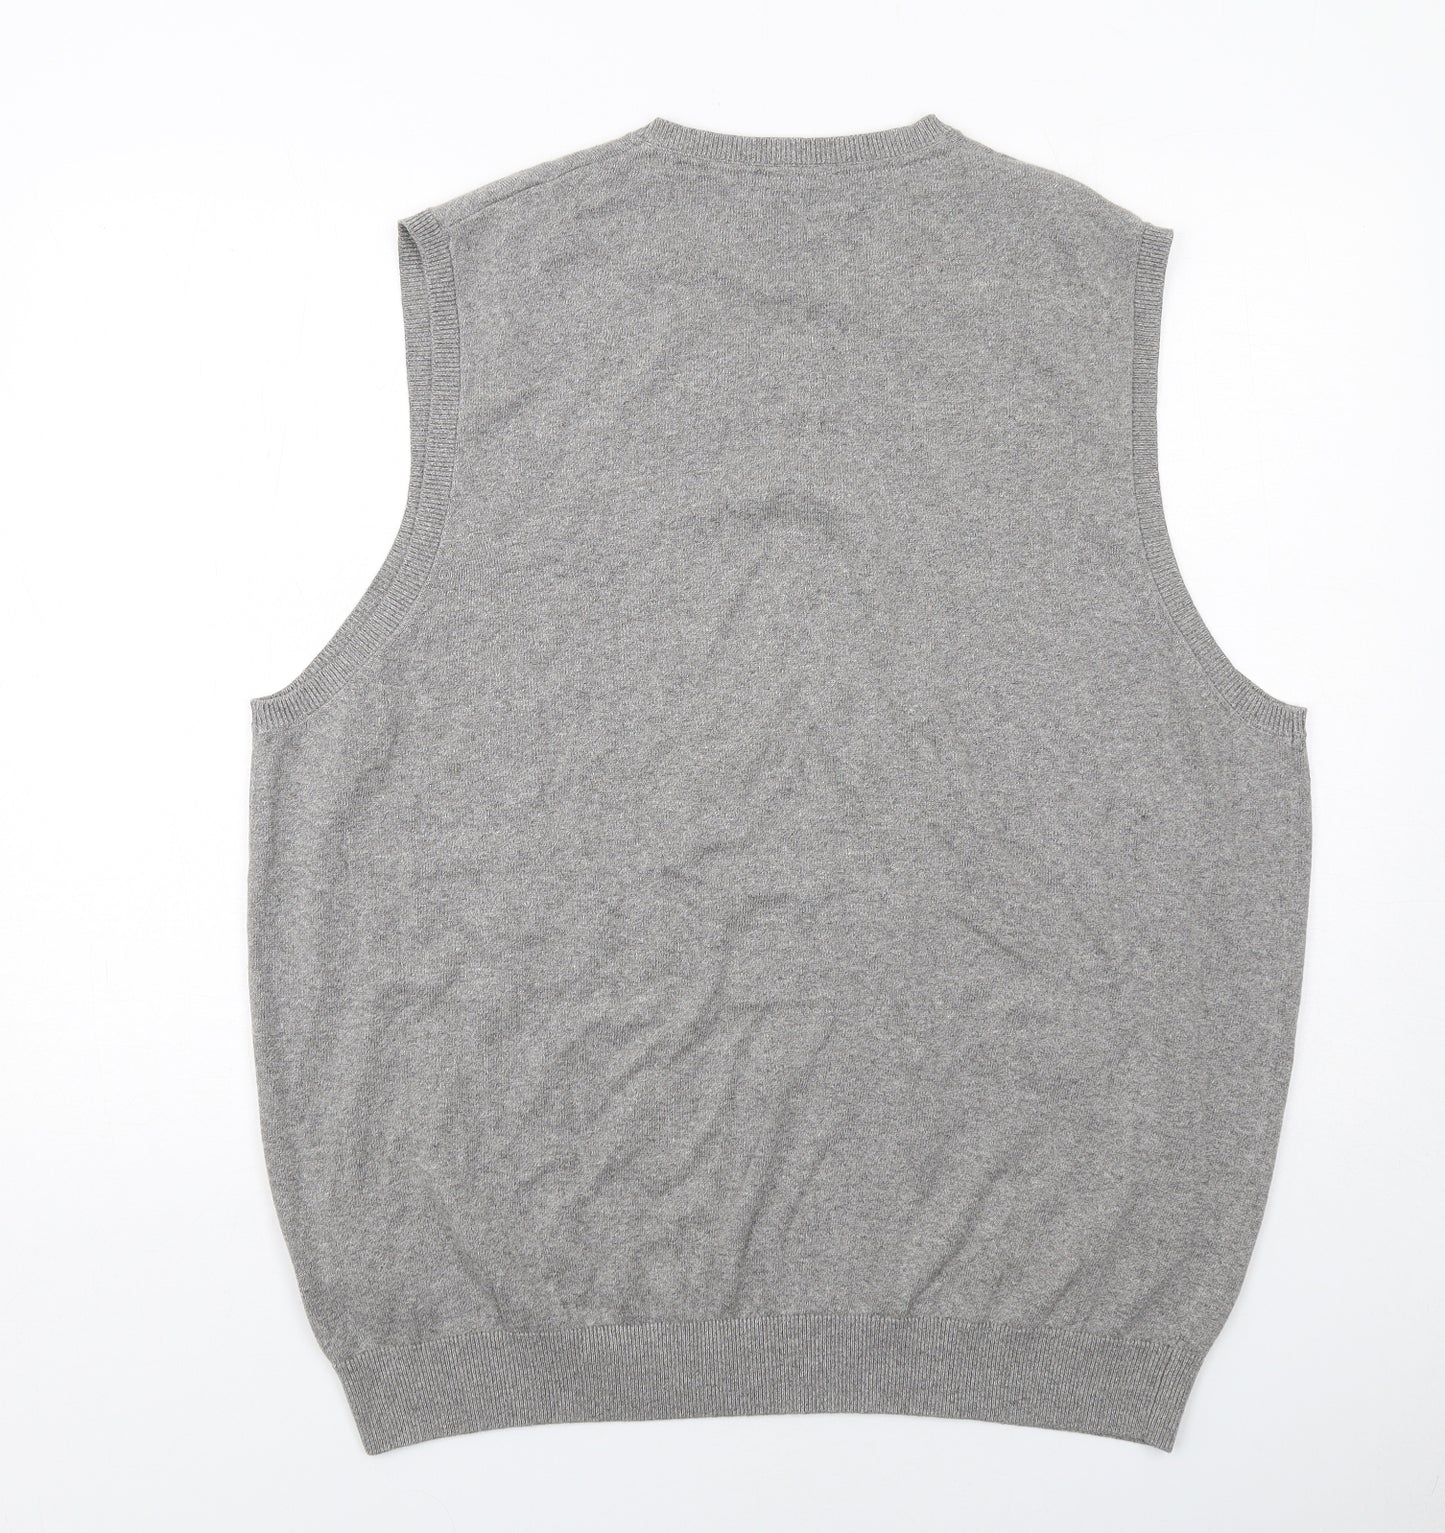 Marks and Spencer Mens Grey V-Neck Cotton Vest Jumper Size 2XL Sleeveless